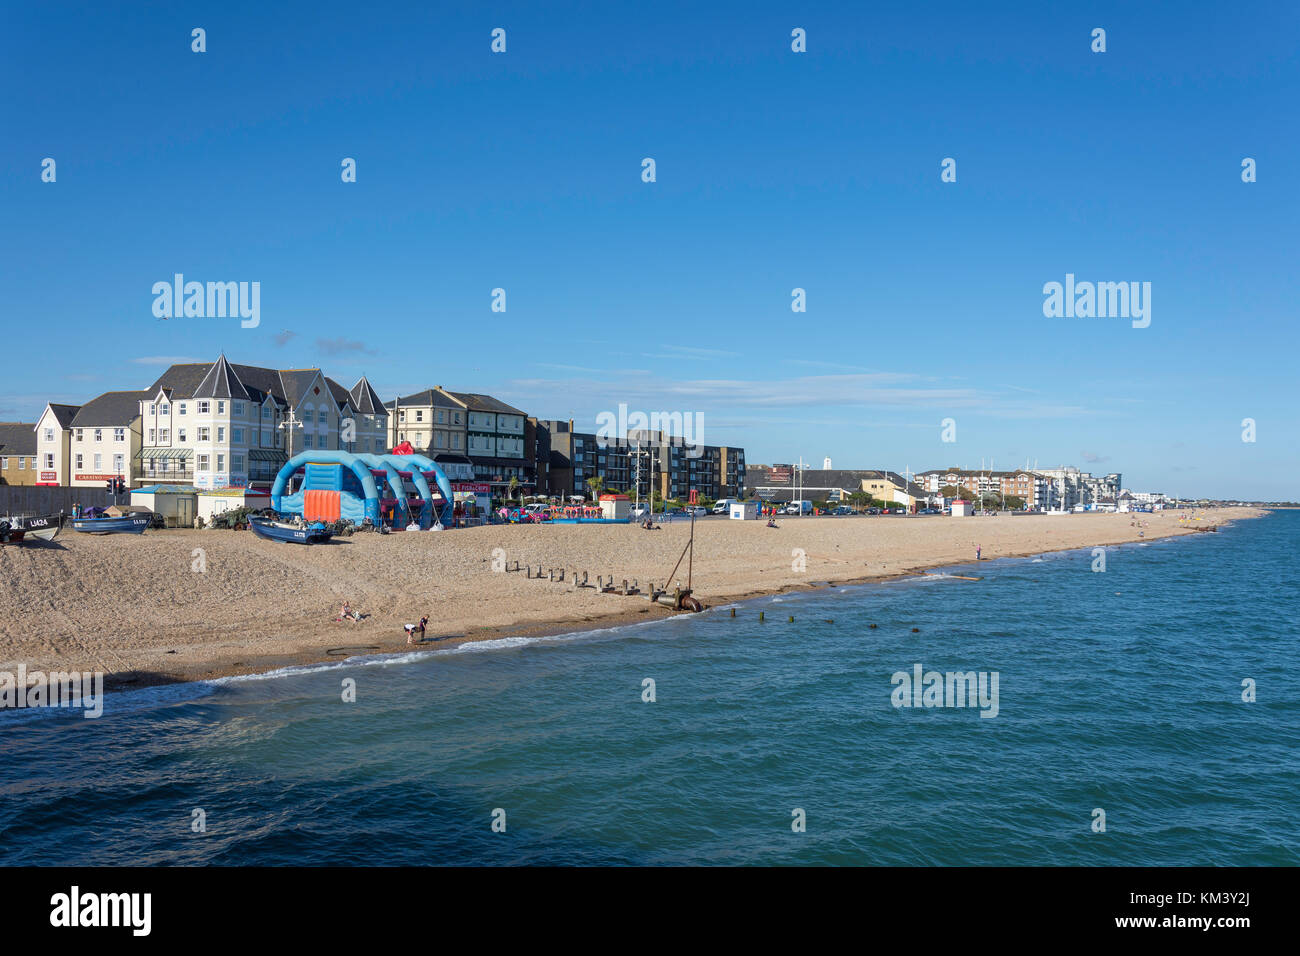 Beach and promenade view from pier, Bognor Regis, West Sussex, England, United Kingdom Stock Photo